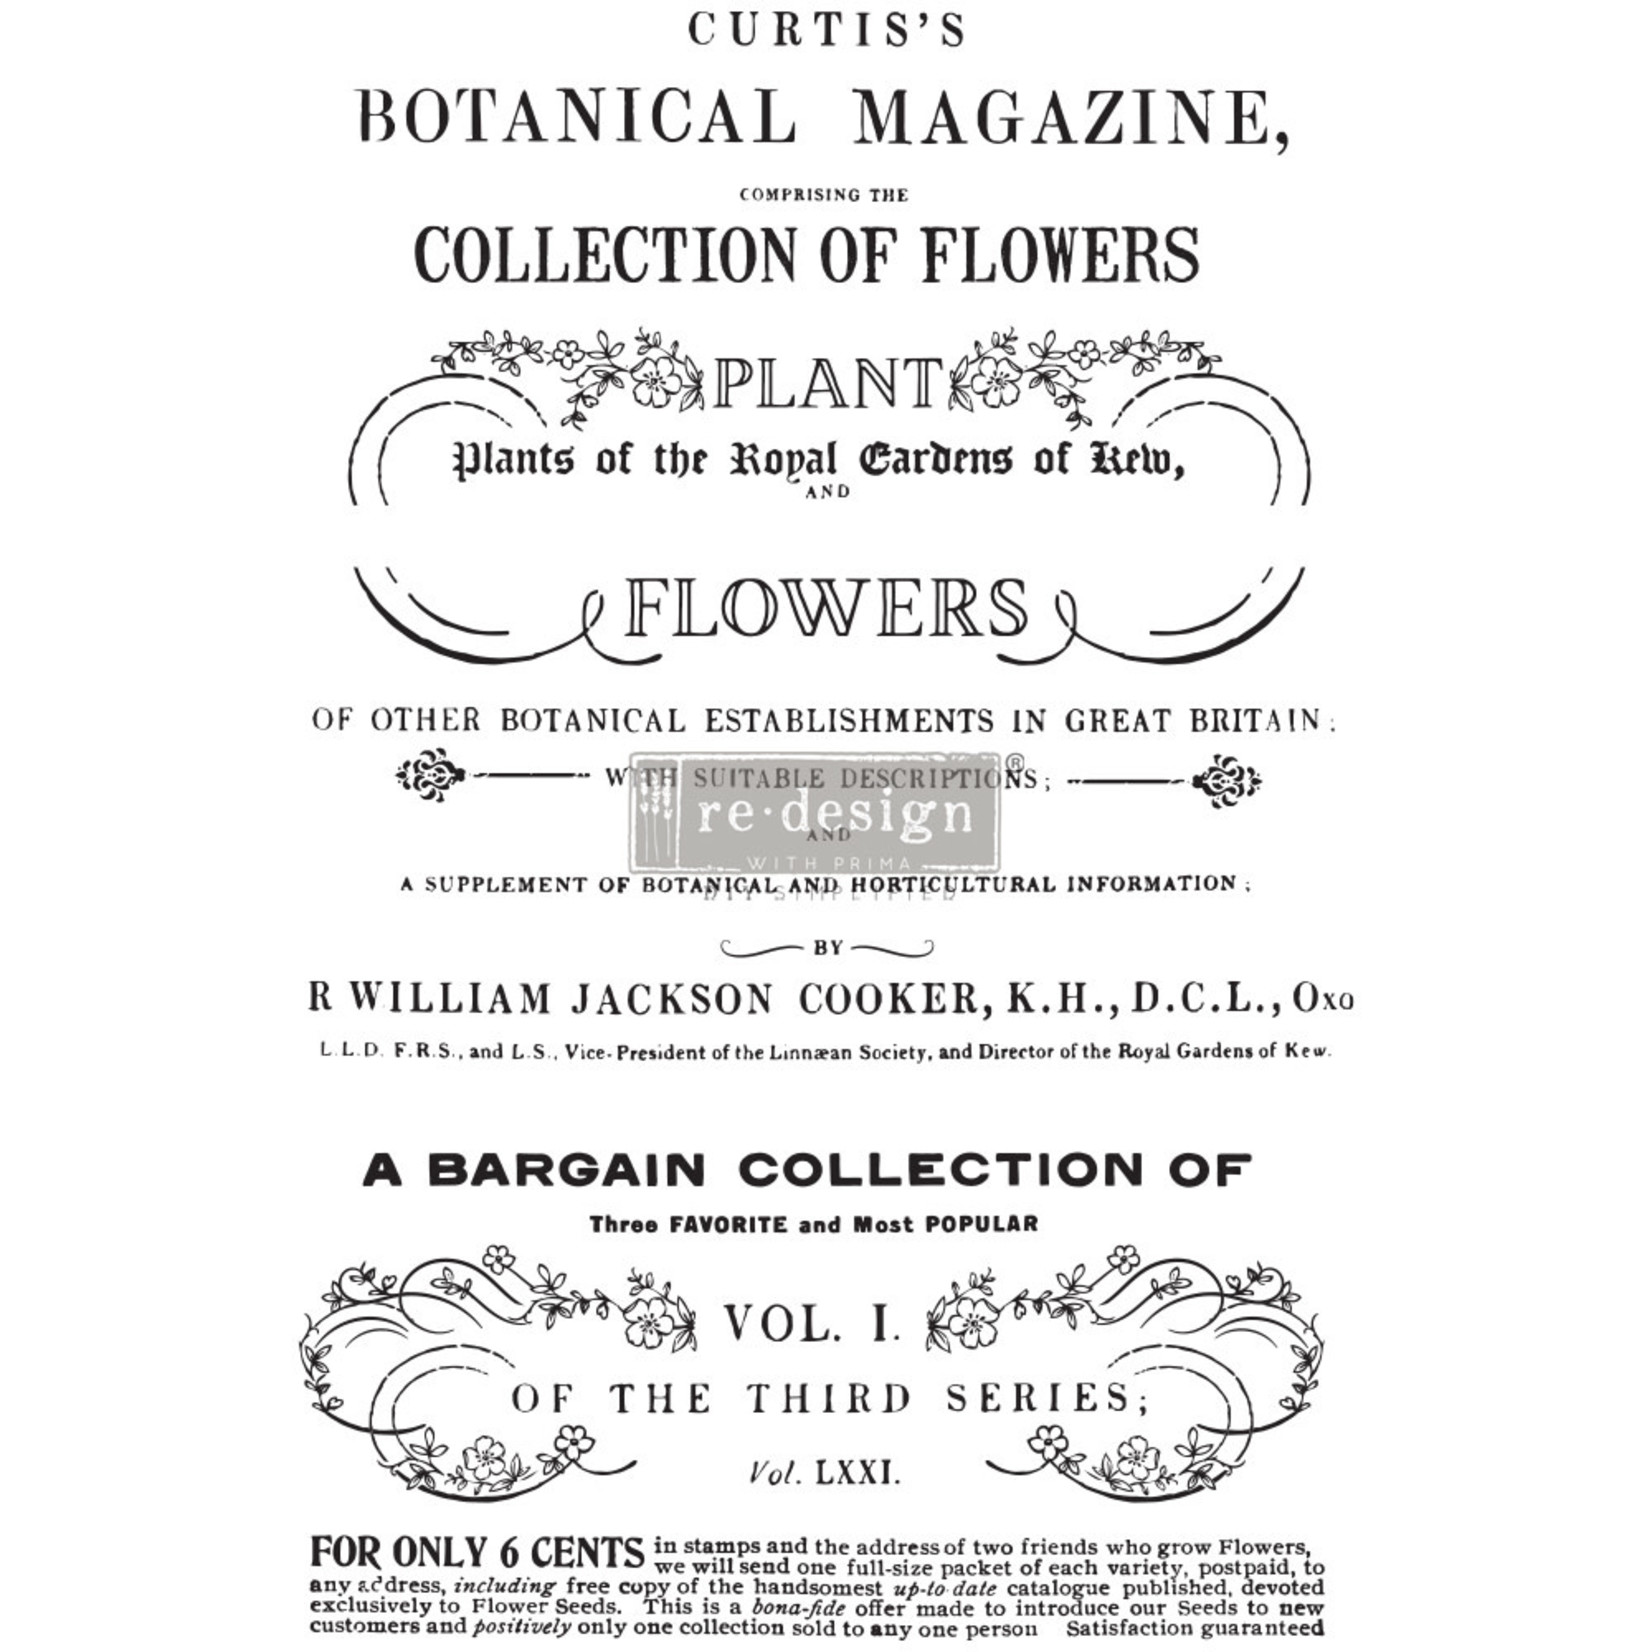 ReDesign with Prima Decor Transfer Botanical Magazine